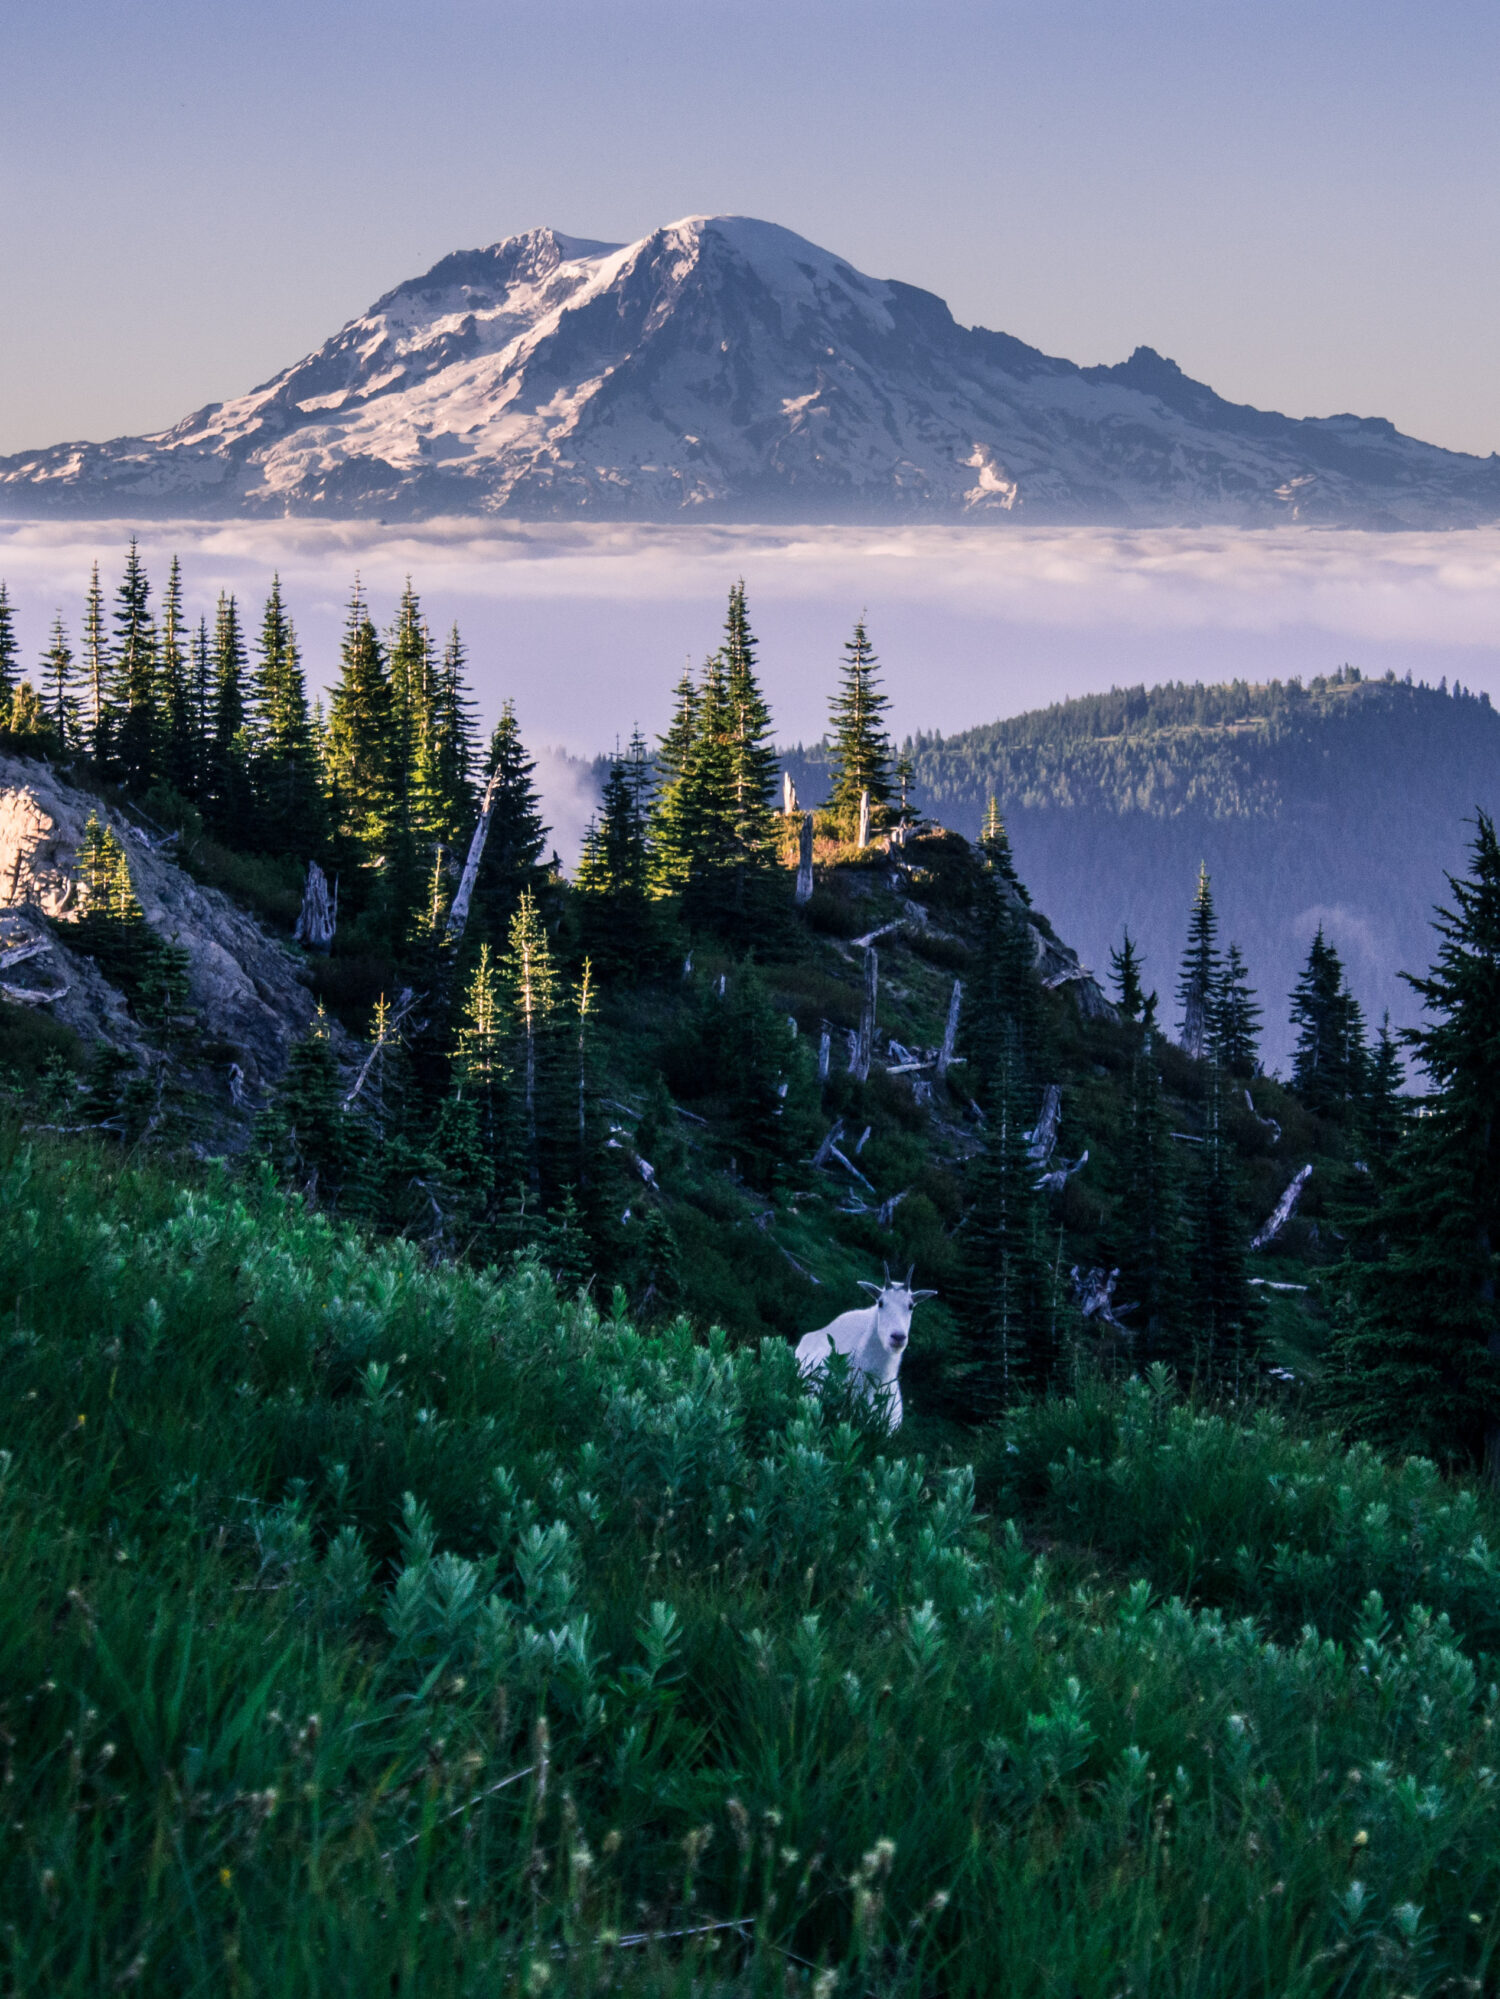 Il Monte Rainier dietro una capra curiosa